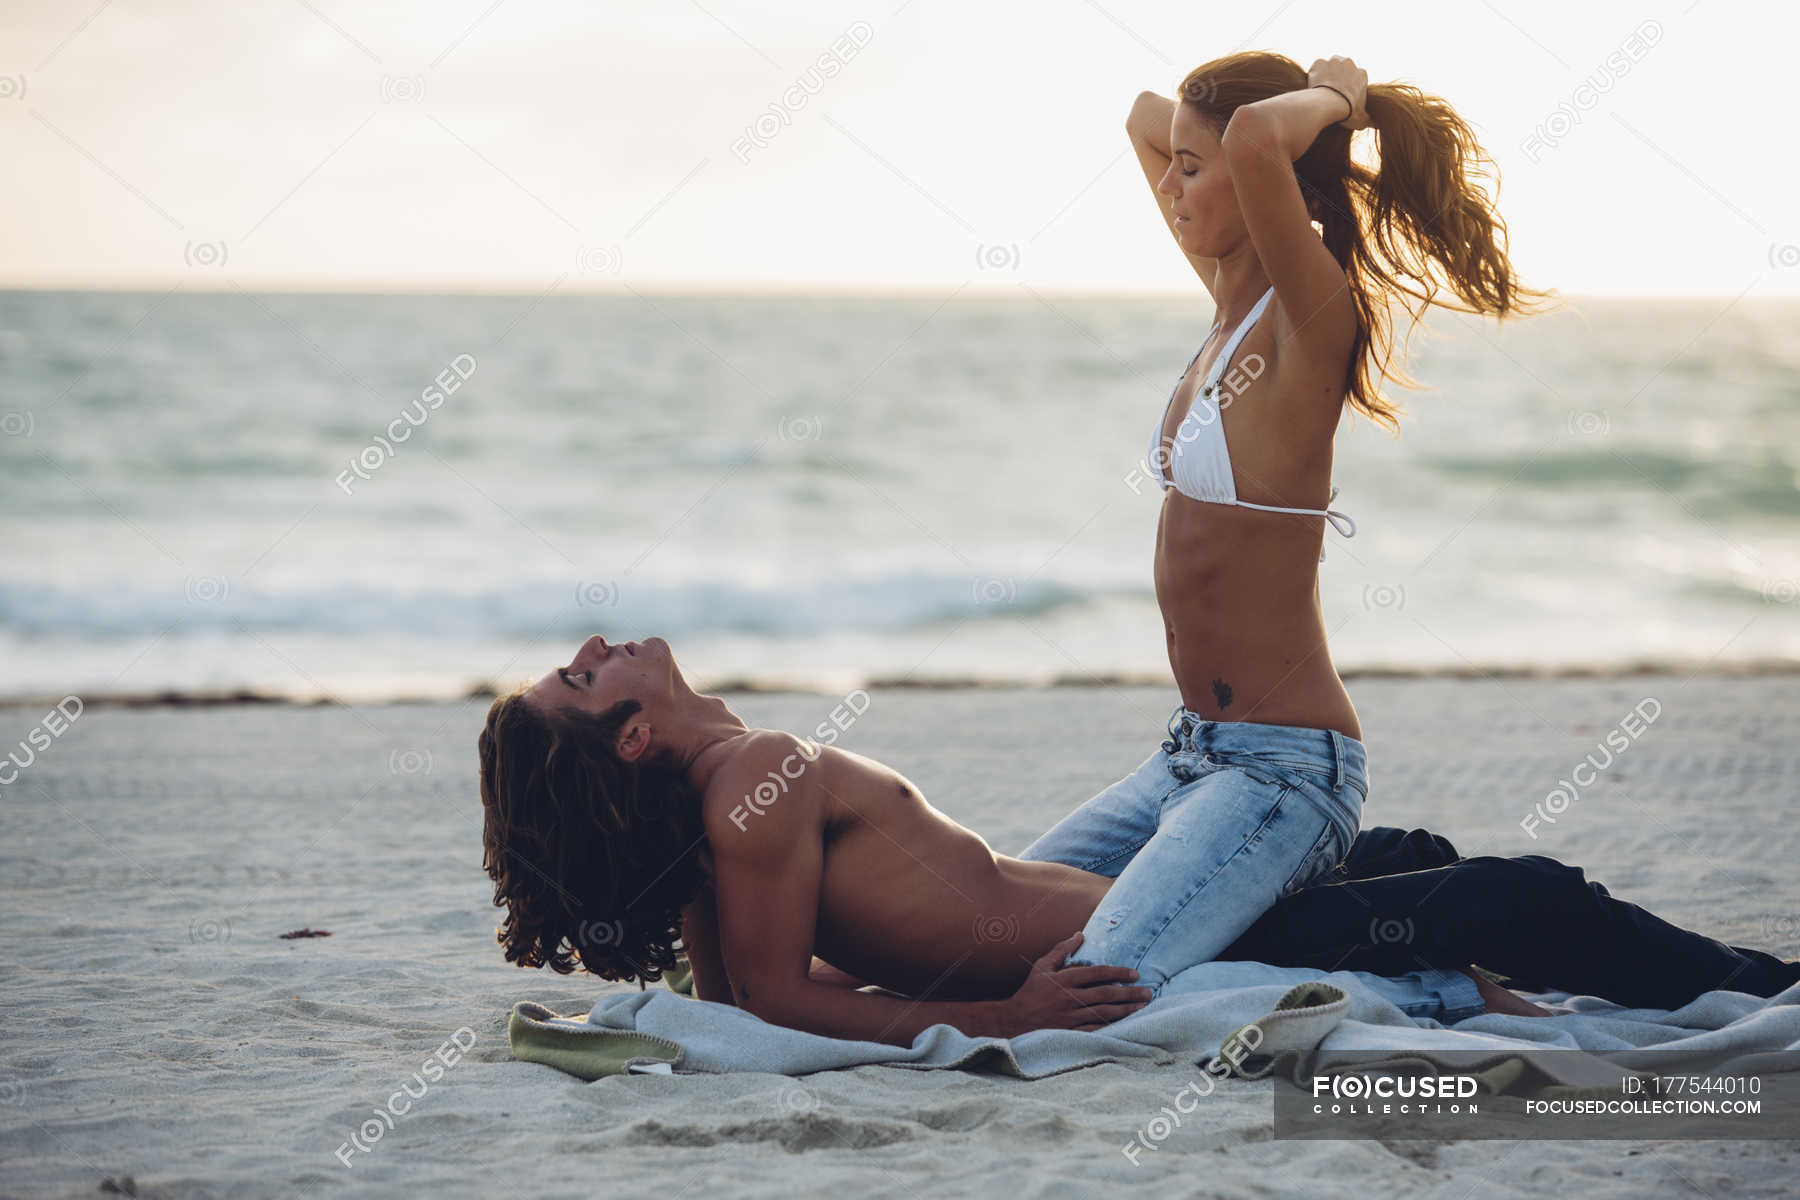 Beach couples